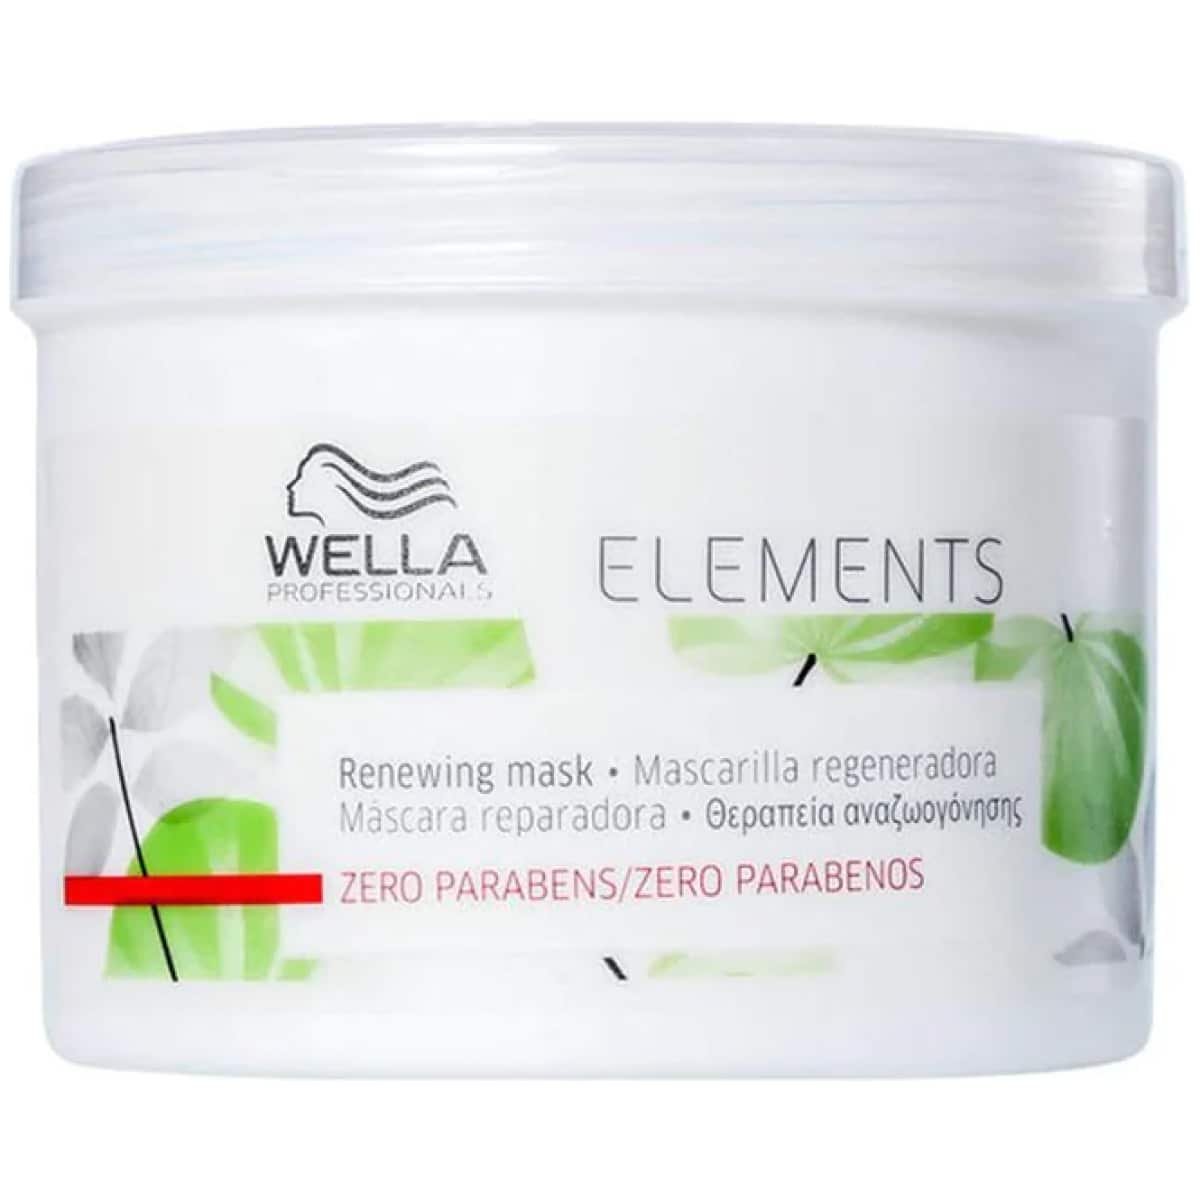 Wella Professionals Elements Renewing Mask Zero Parabens 500ml